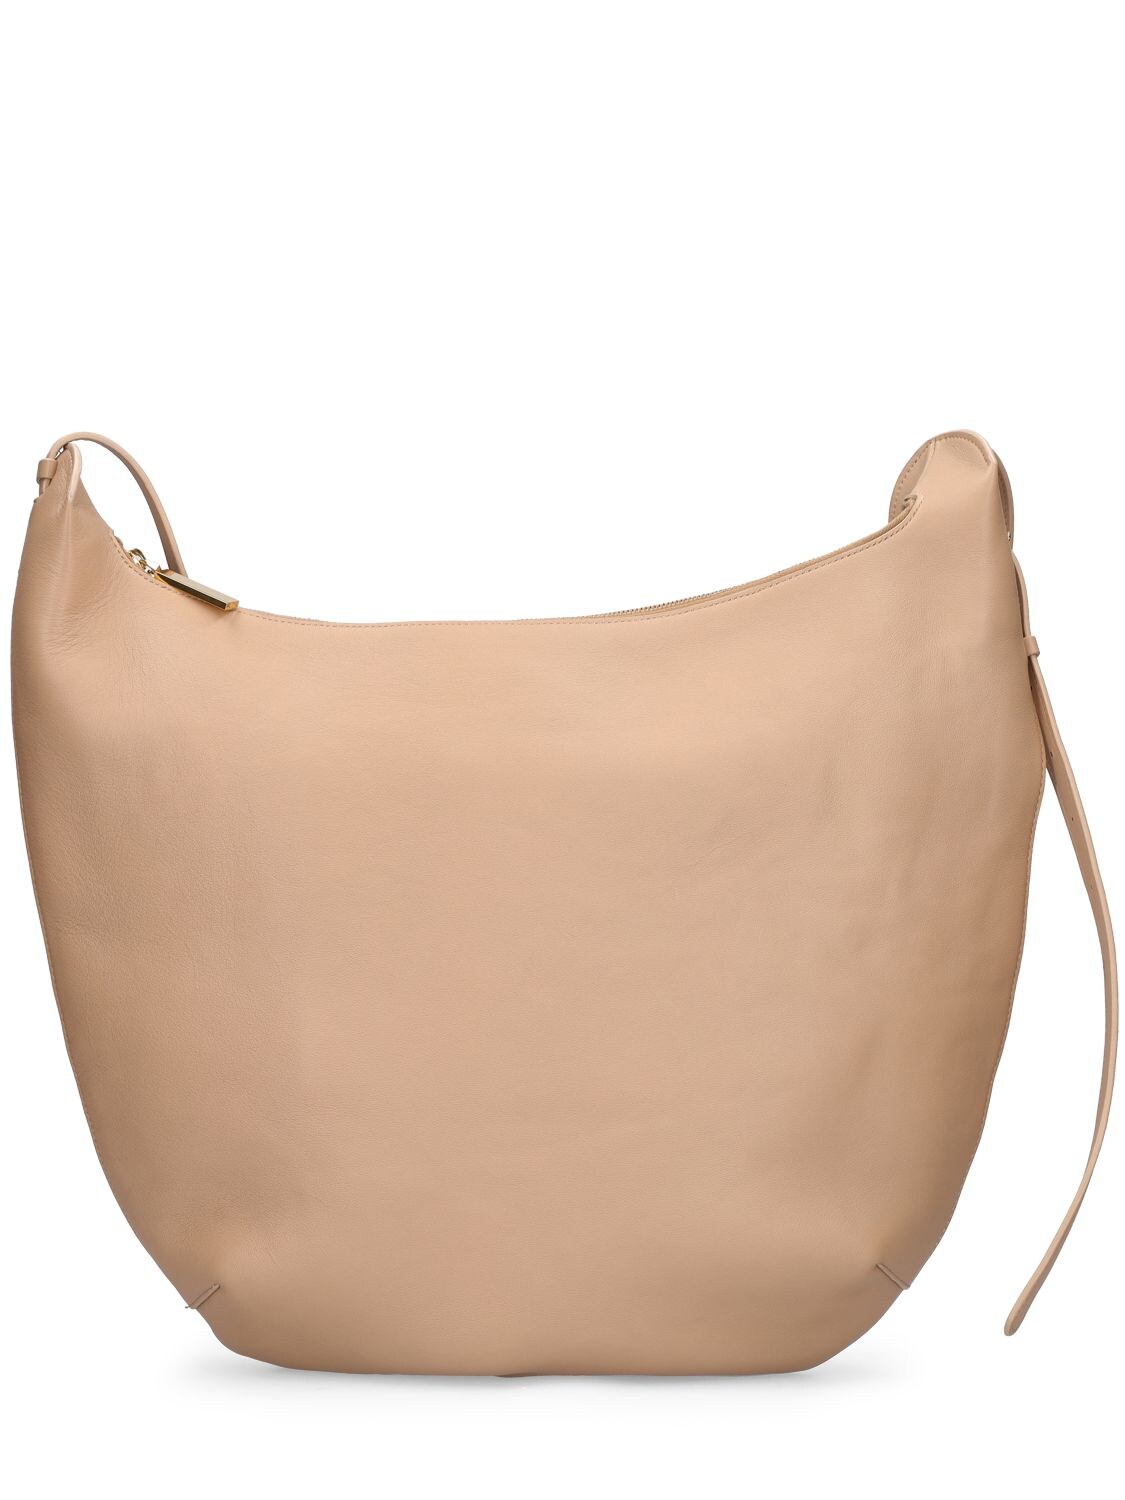 THE ROW Allie Leather Shoulder Bag